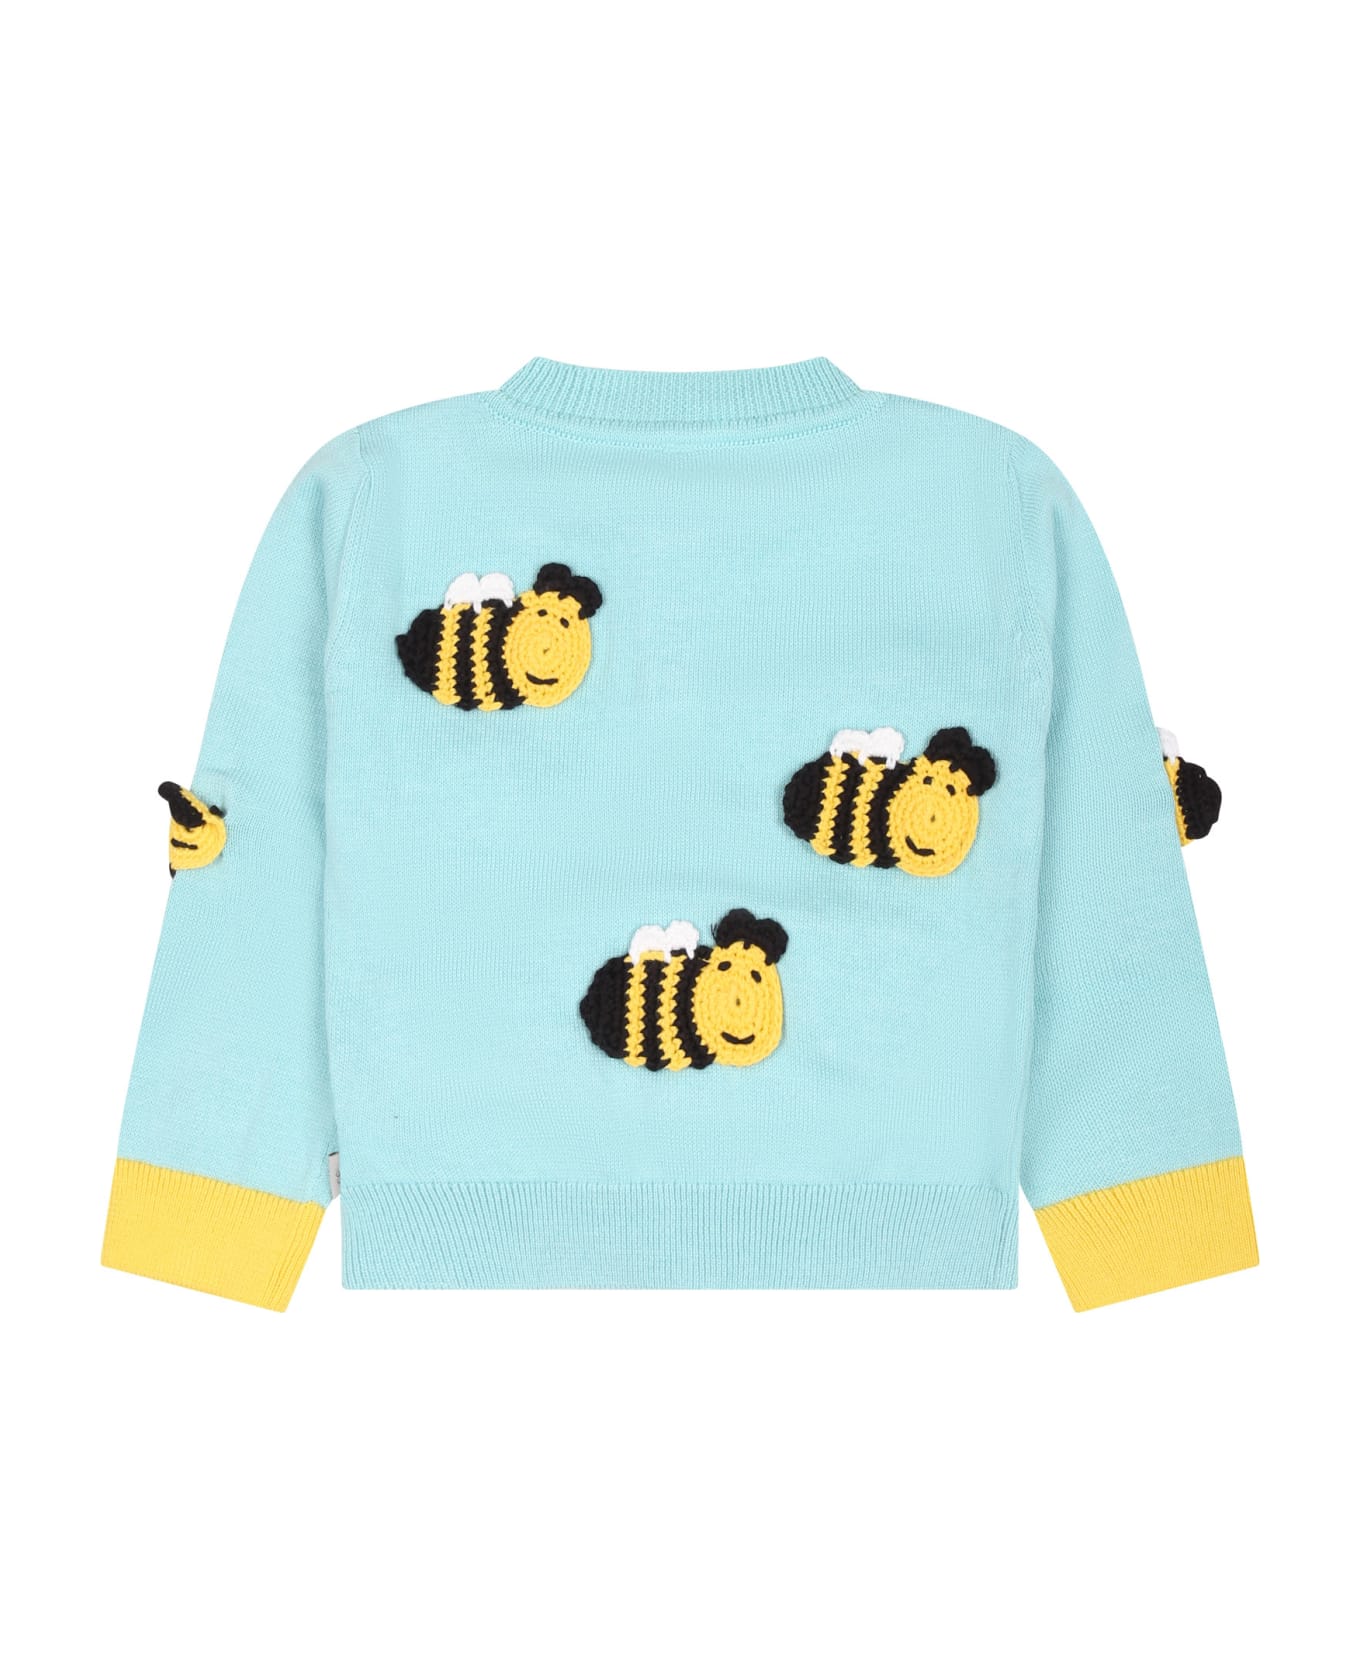 Stella McCartney Kids Light Blue Cardigan For Baby Girl With Bees - Celeste